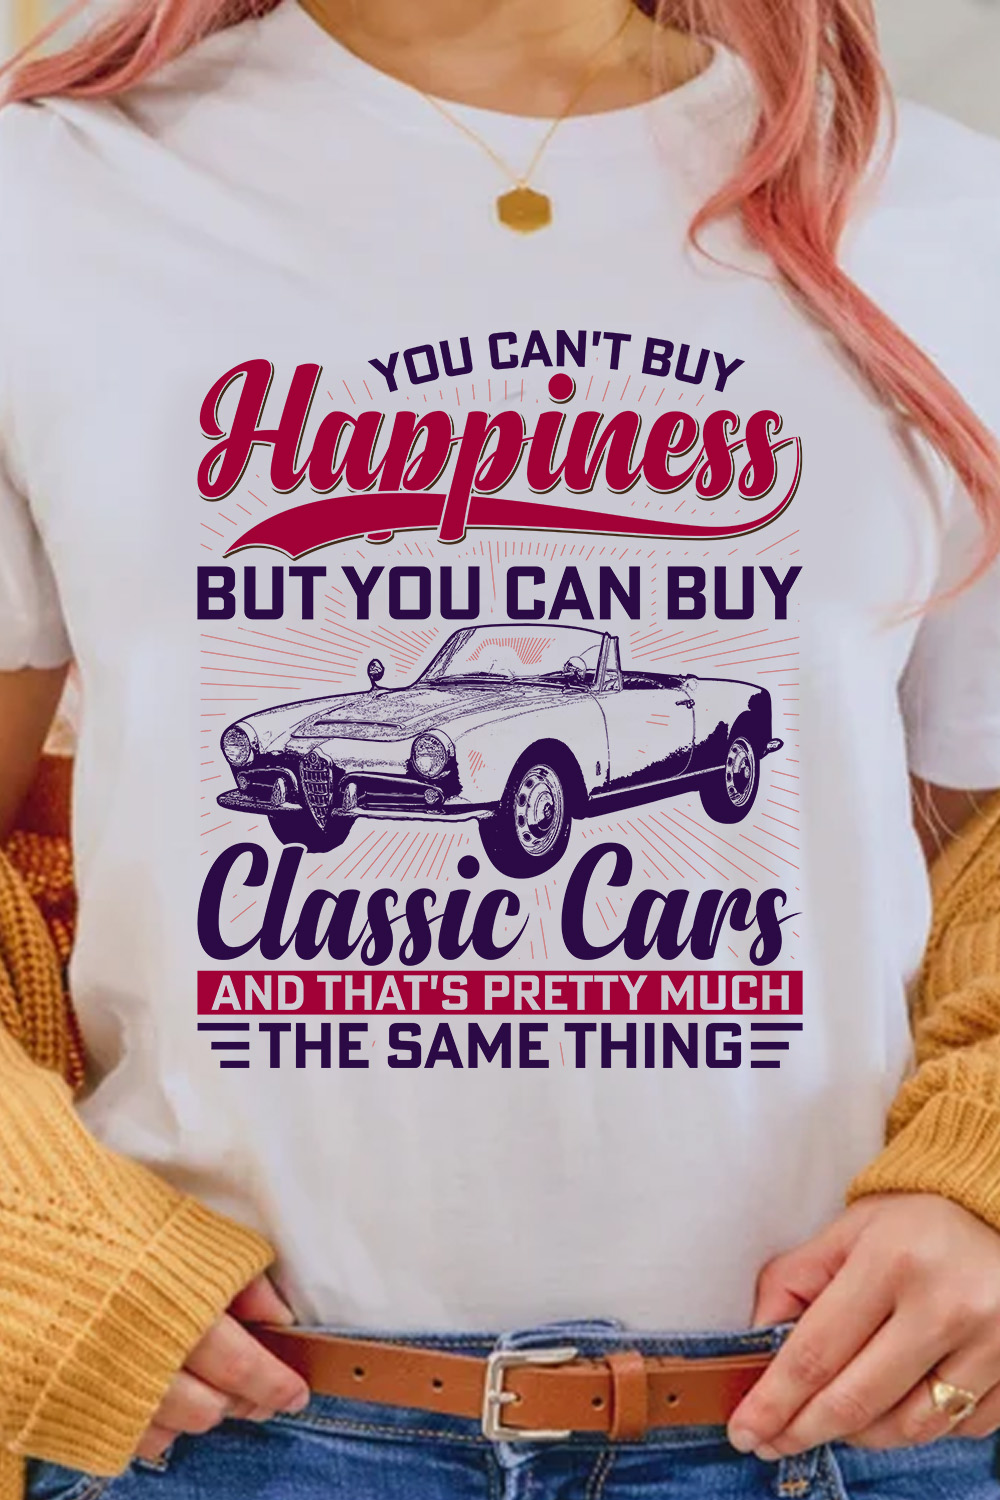 Classic Car T-shirt Designs pinterest preview image.